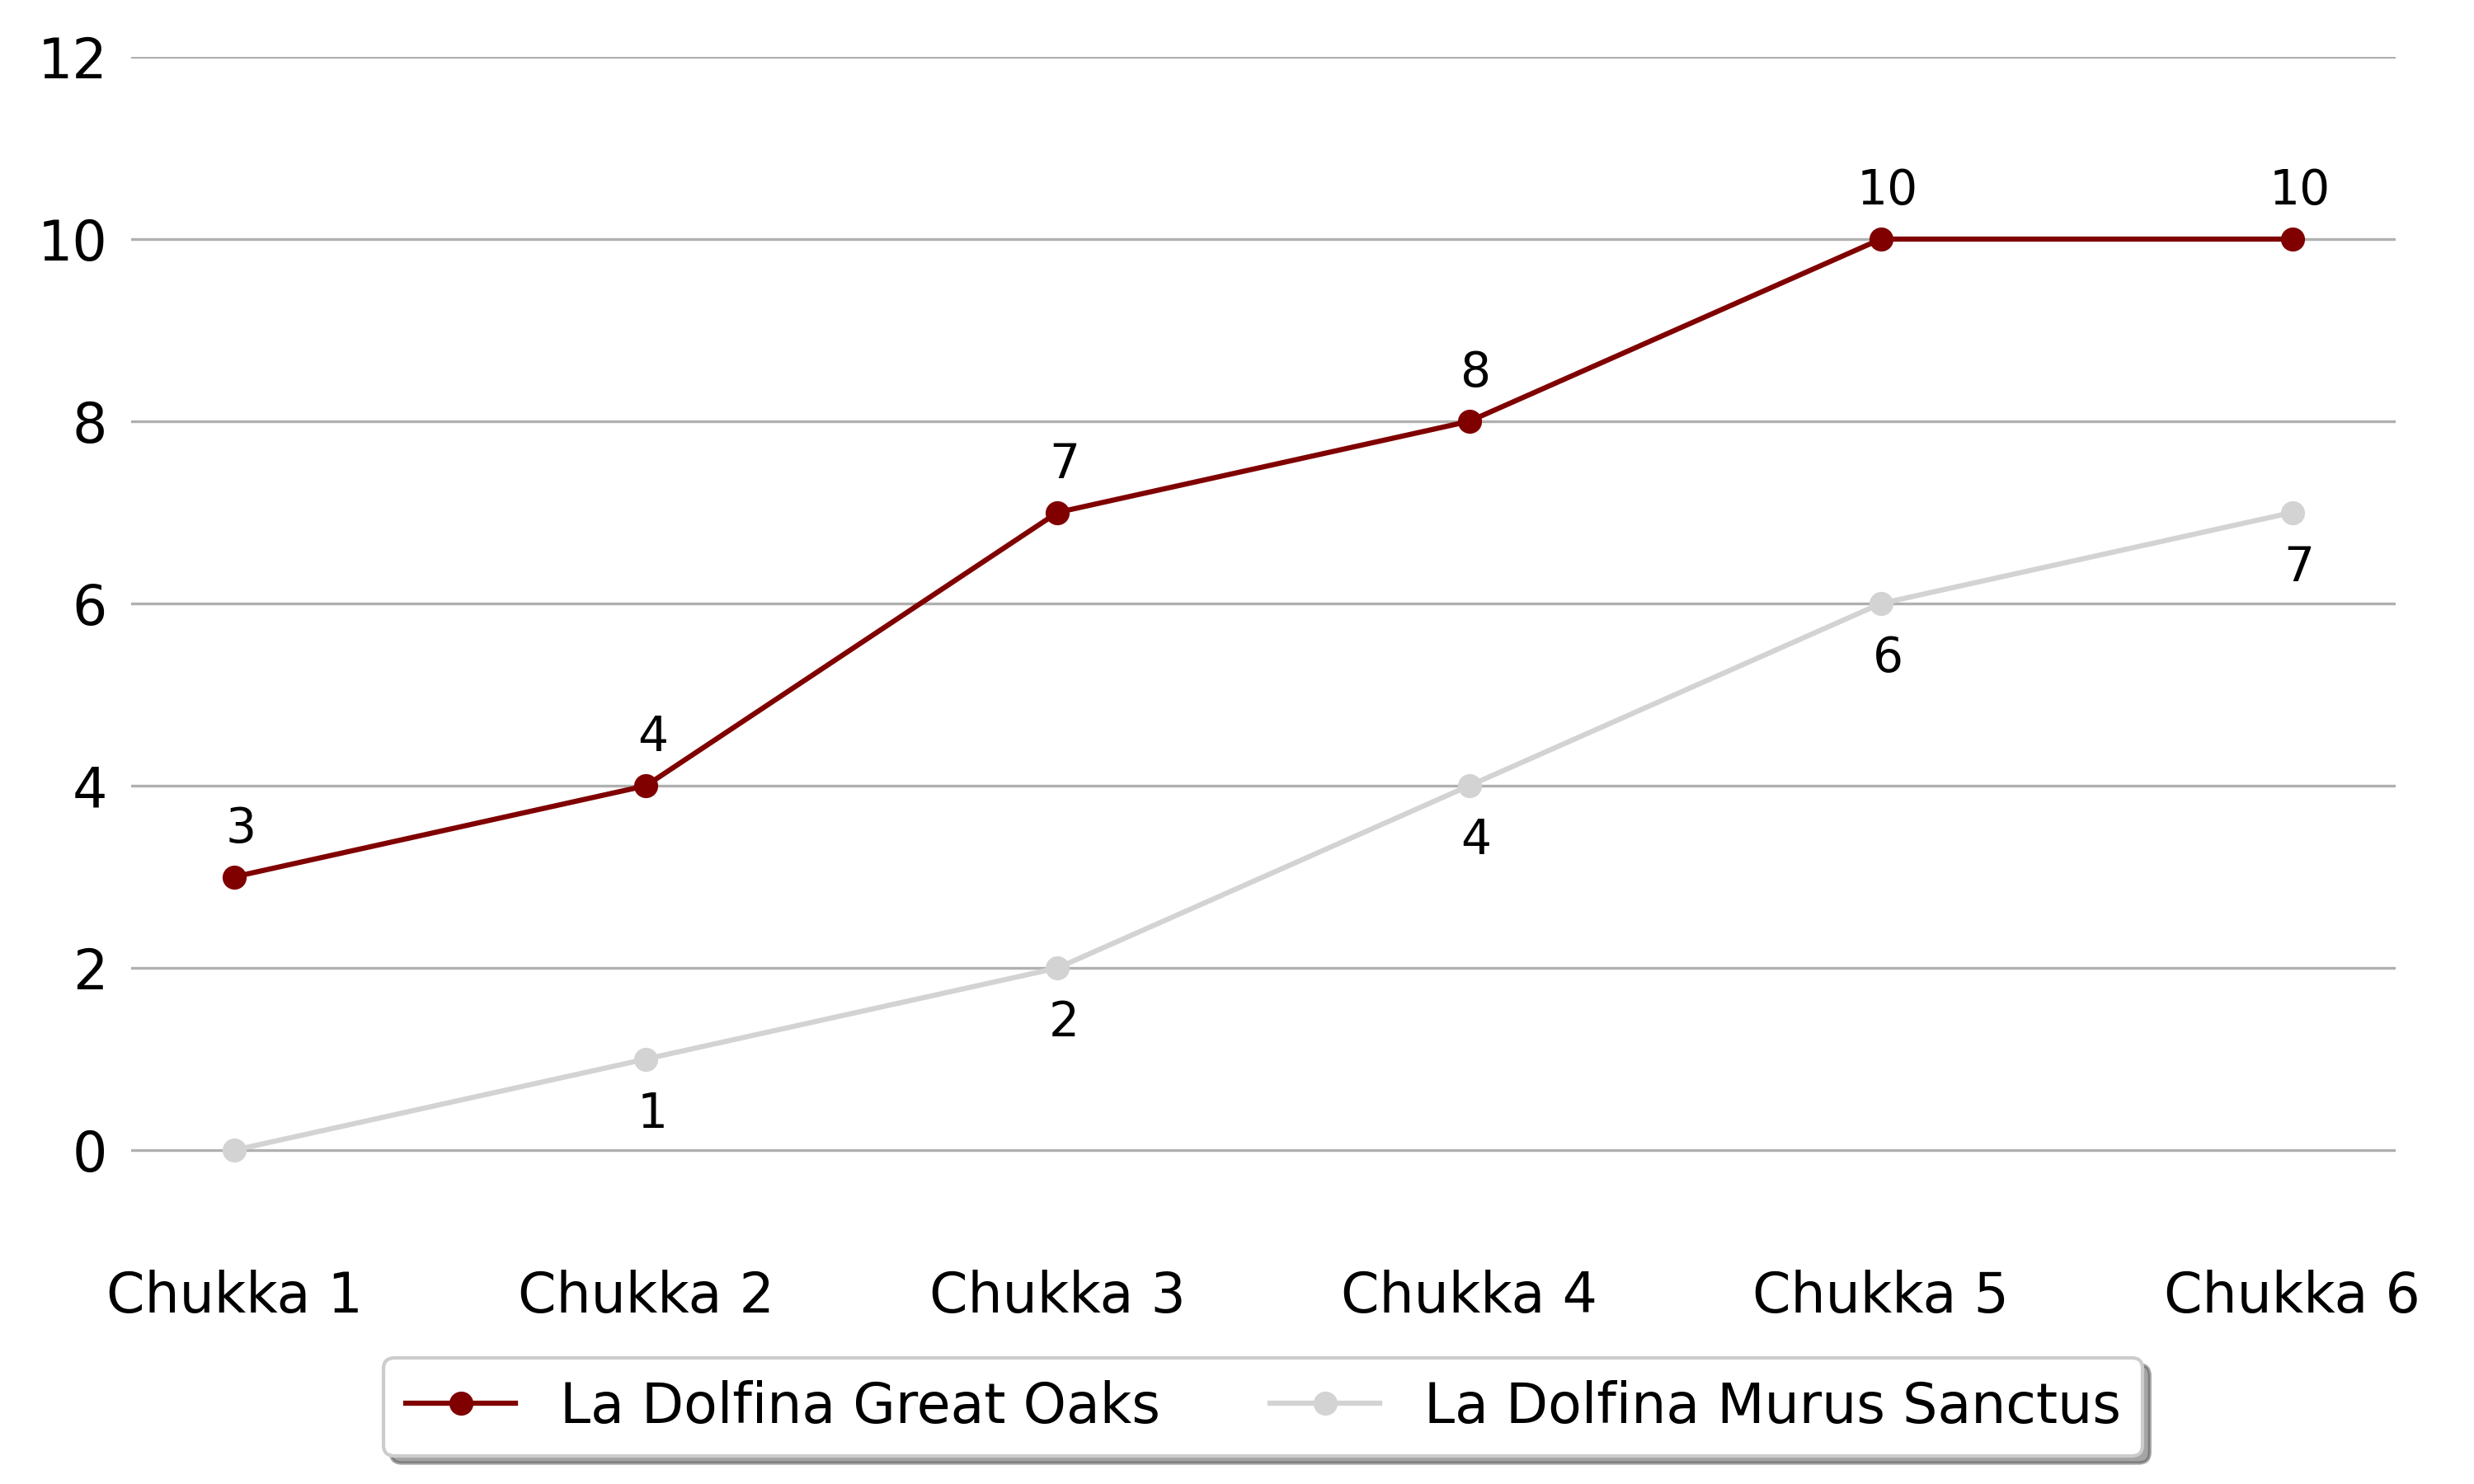 La Dolfina Great Oaks won against La Dolfina Murus Sanctus 5